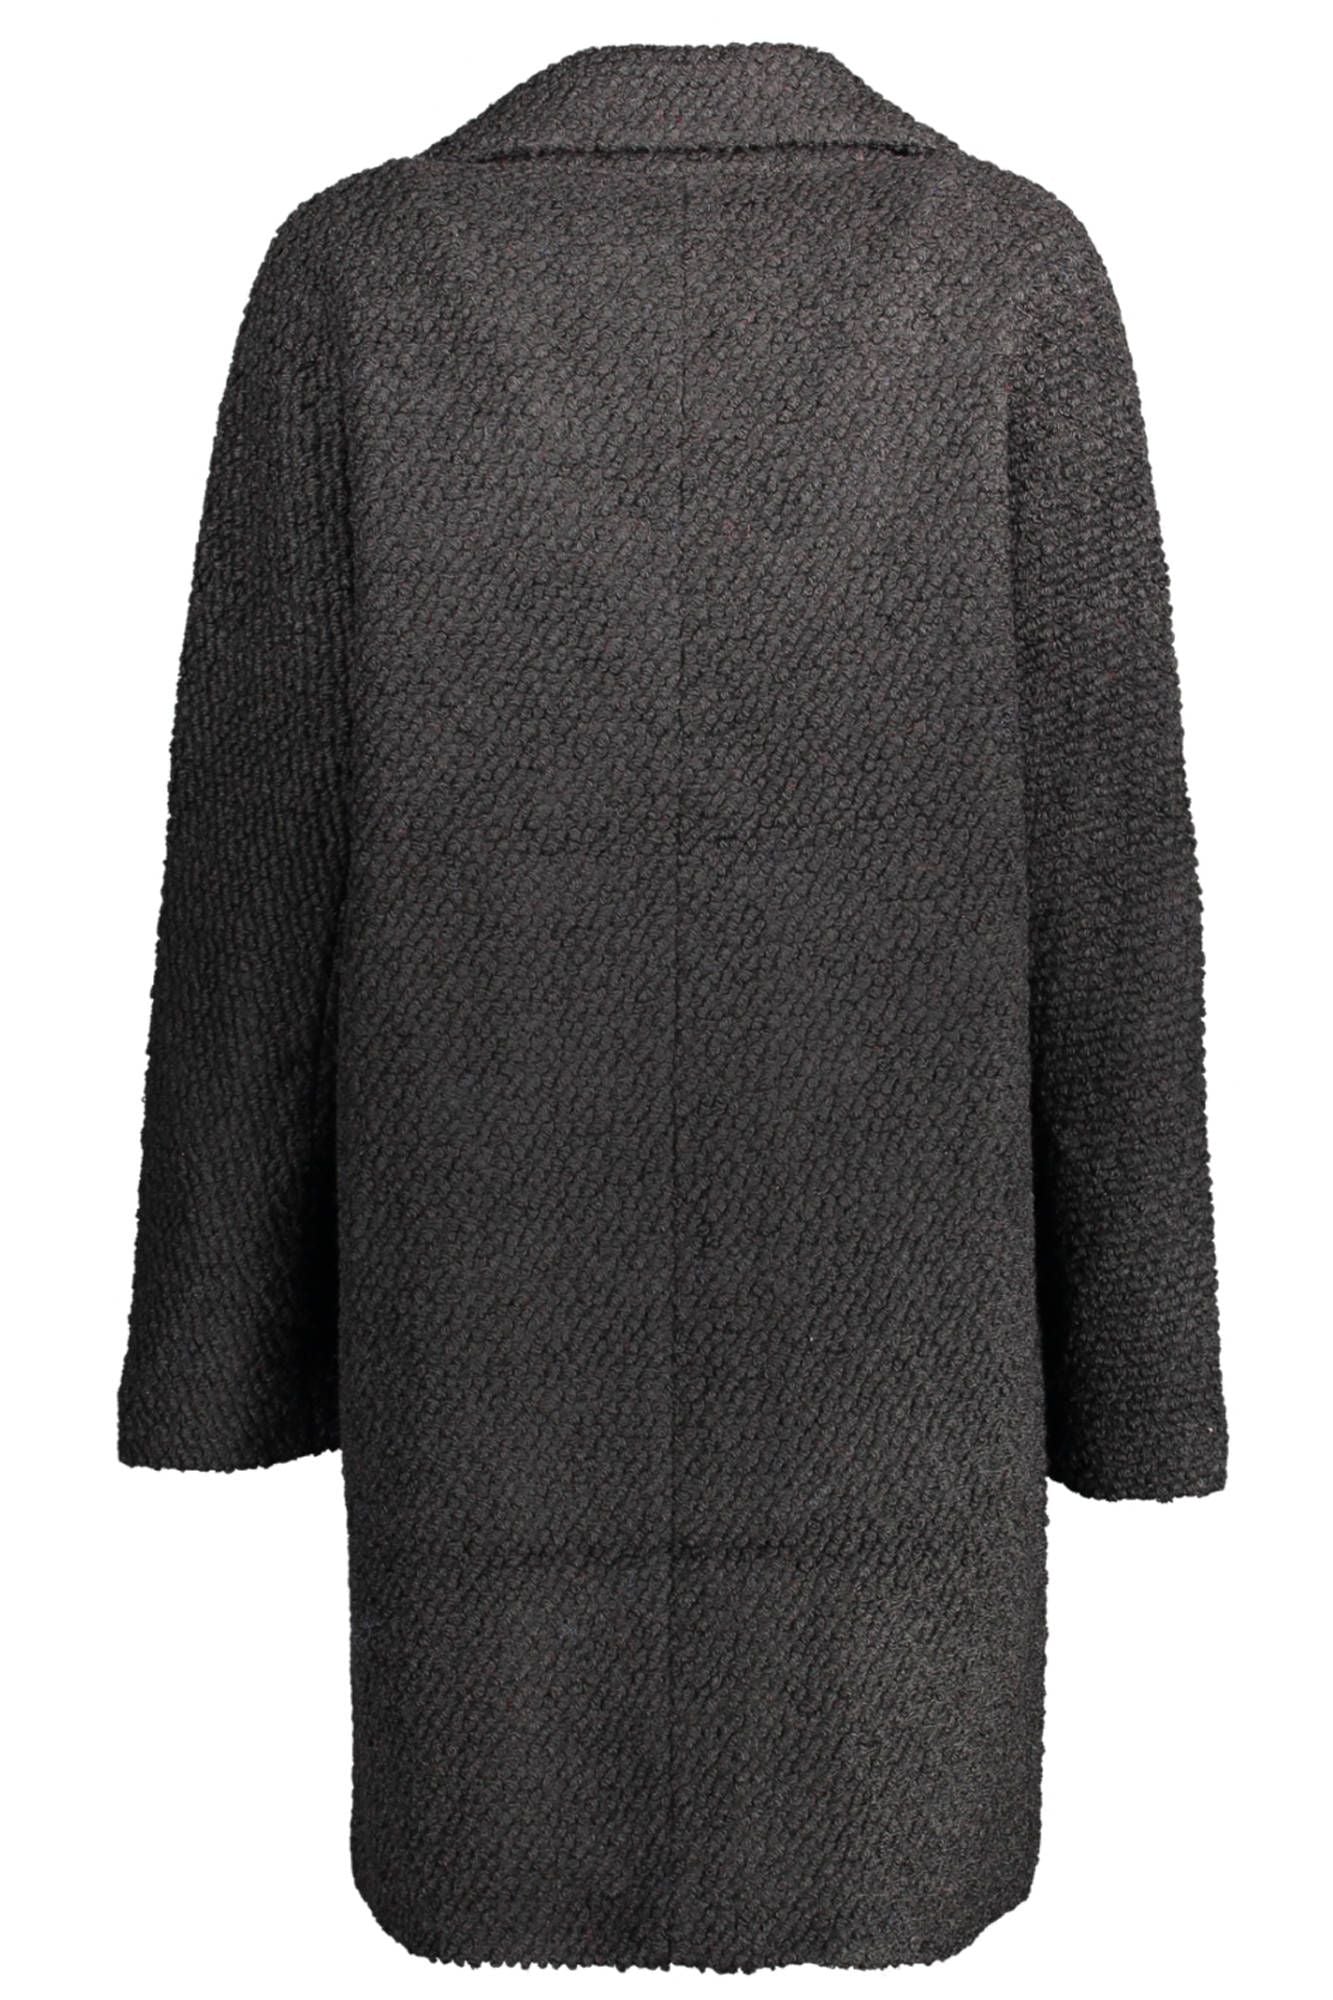 Desigual Black Polyester Jackets & Coat